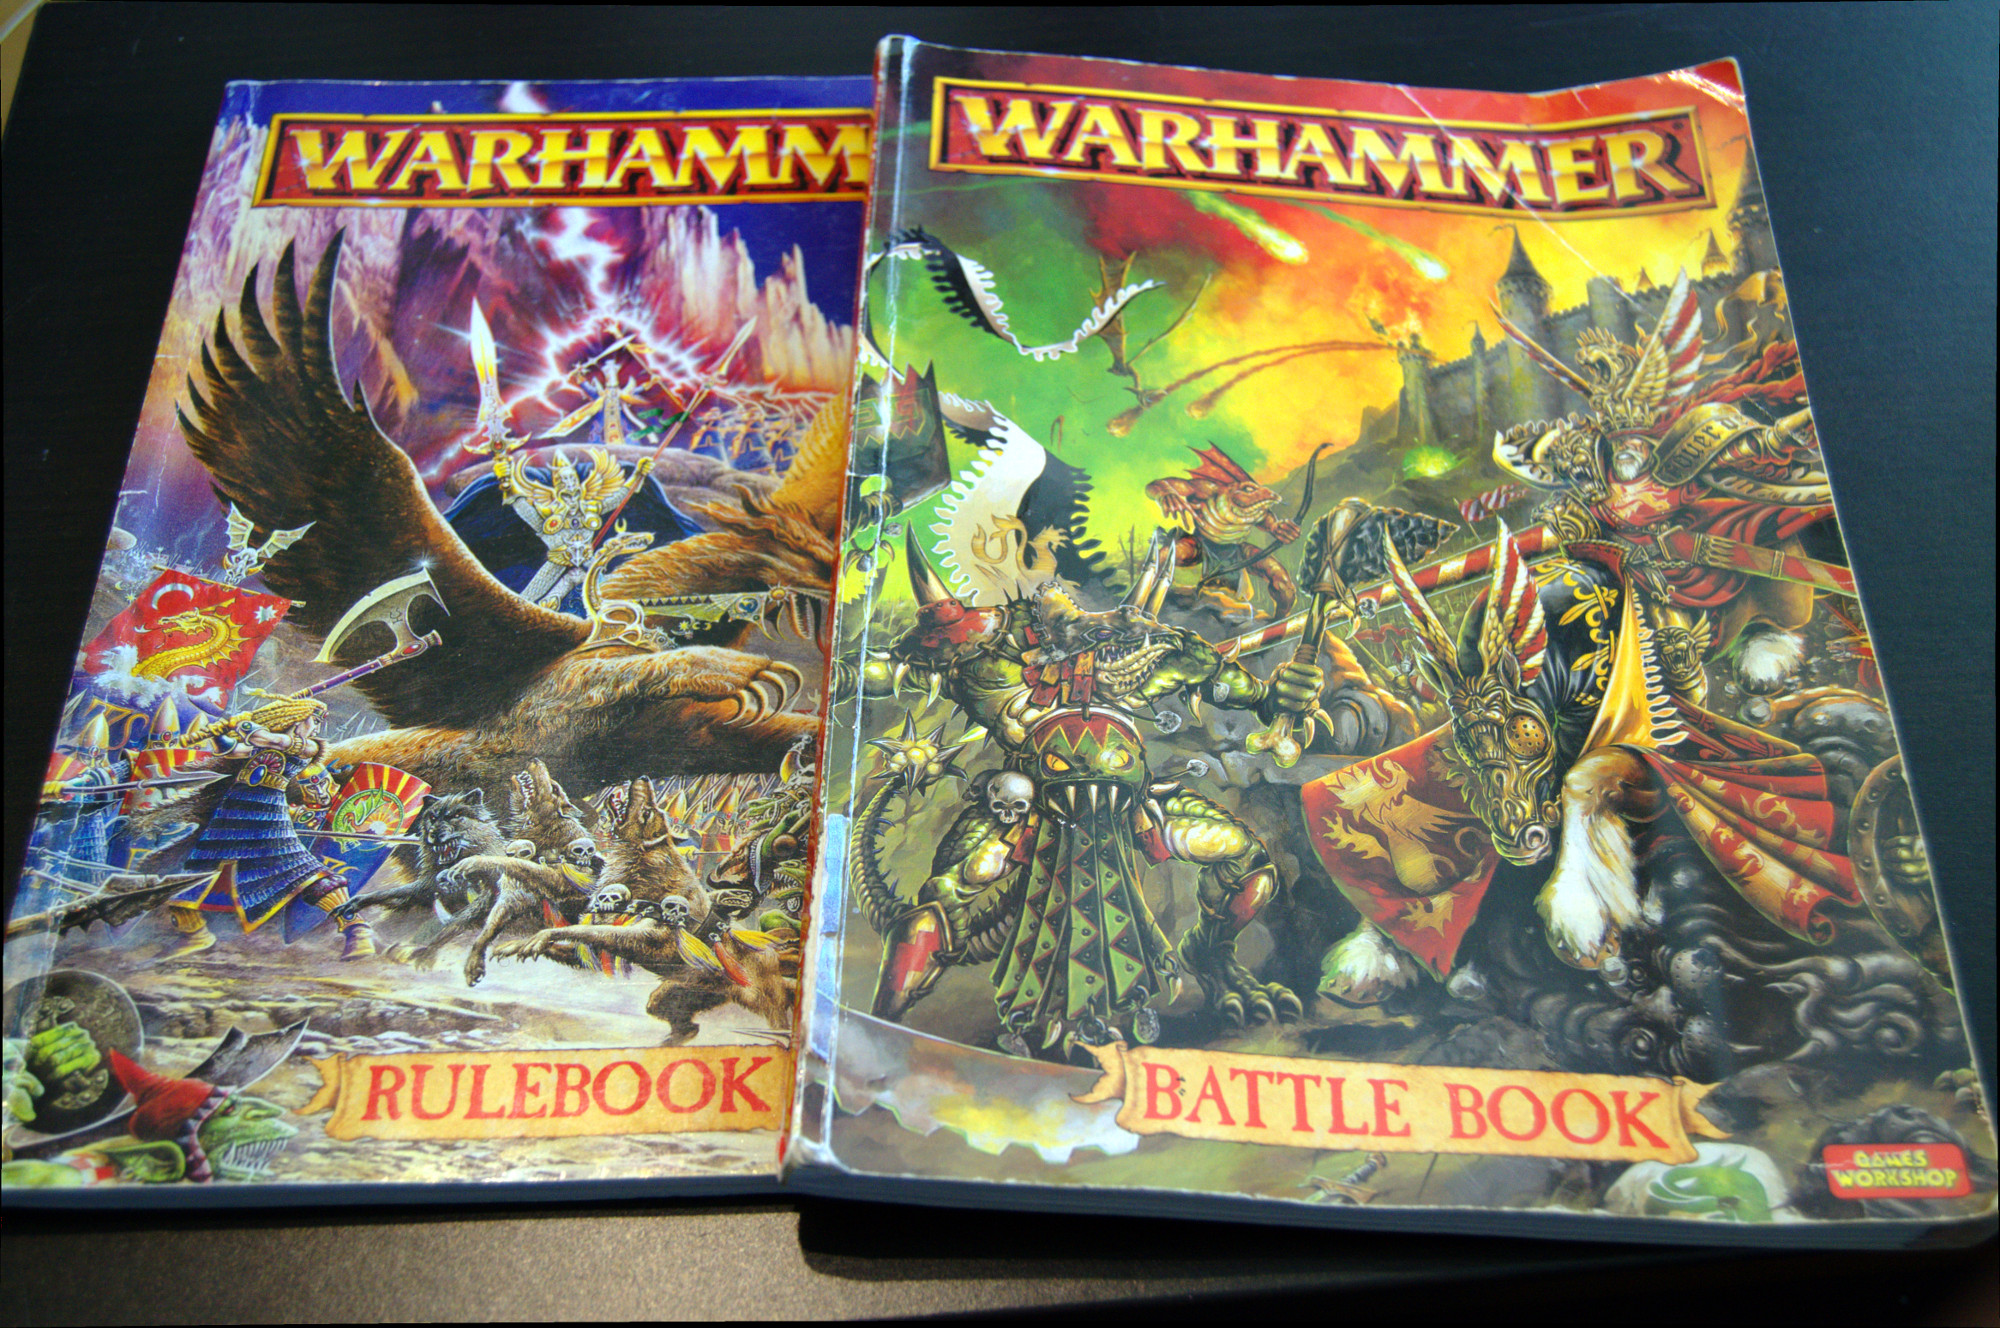 Battle book. Книги вархаммер фэнтези. Warhammer Fantasy Battles книги порядок.